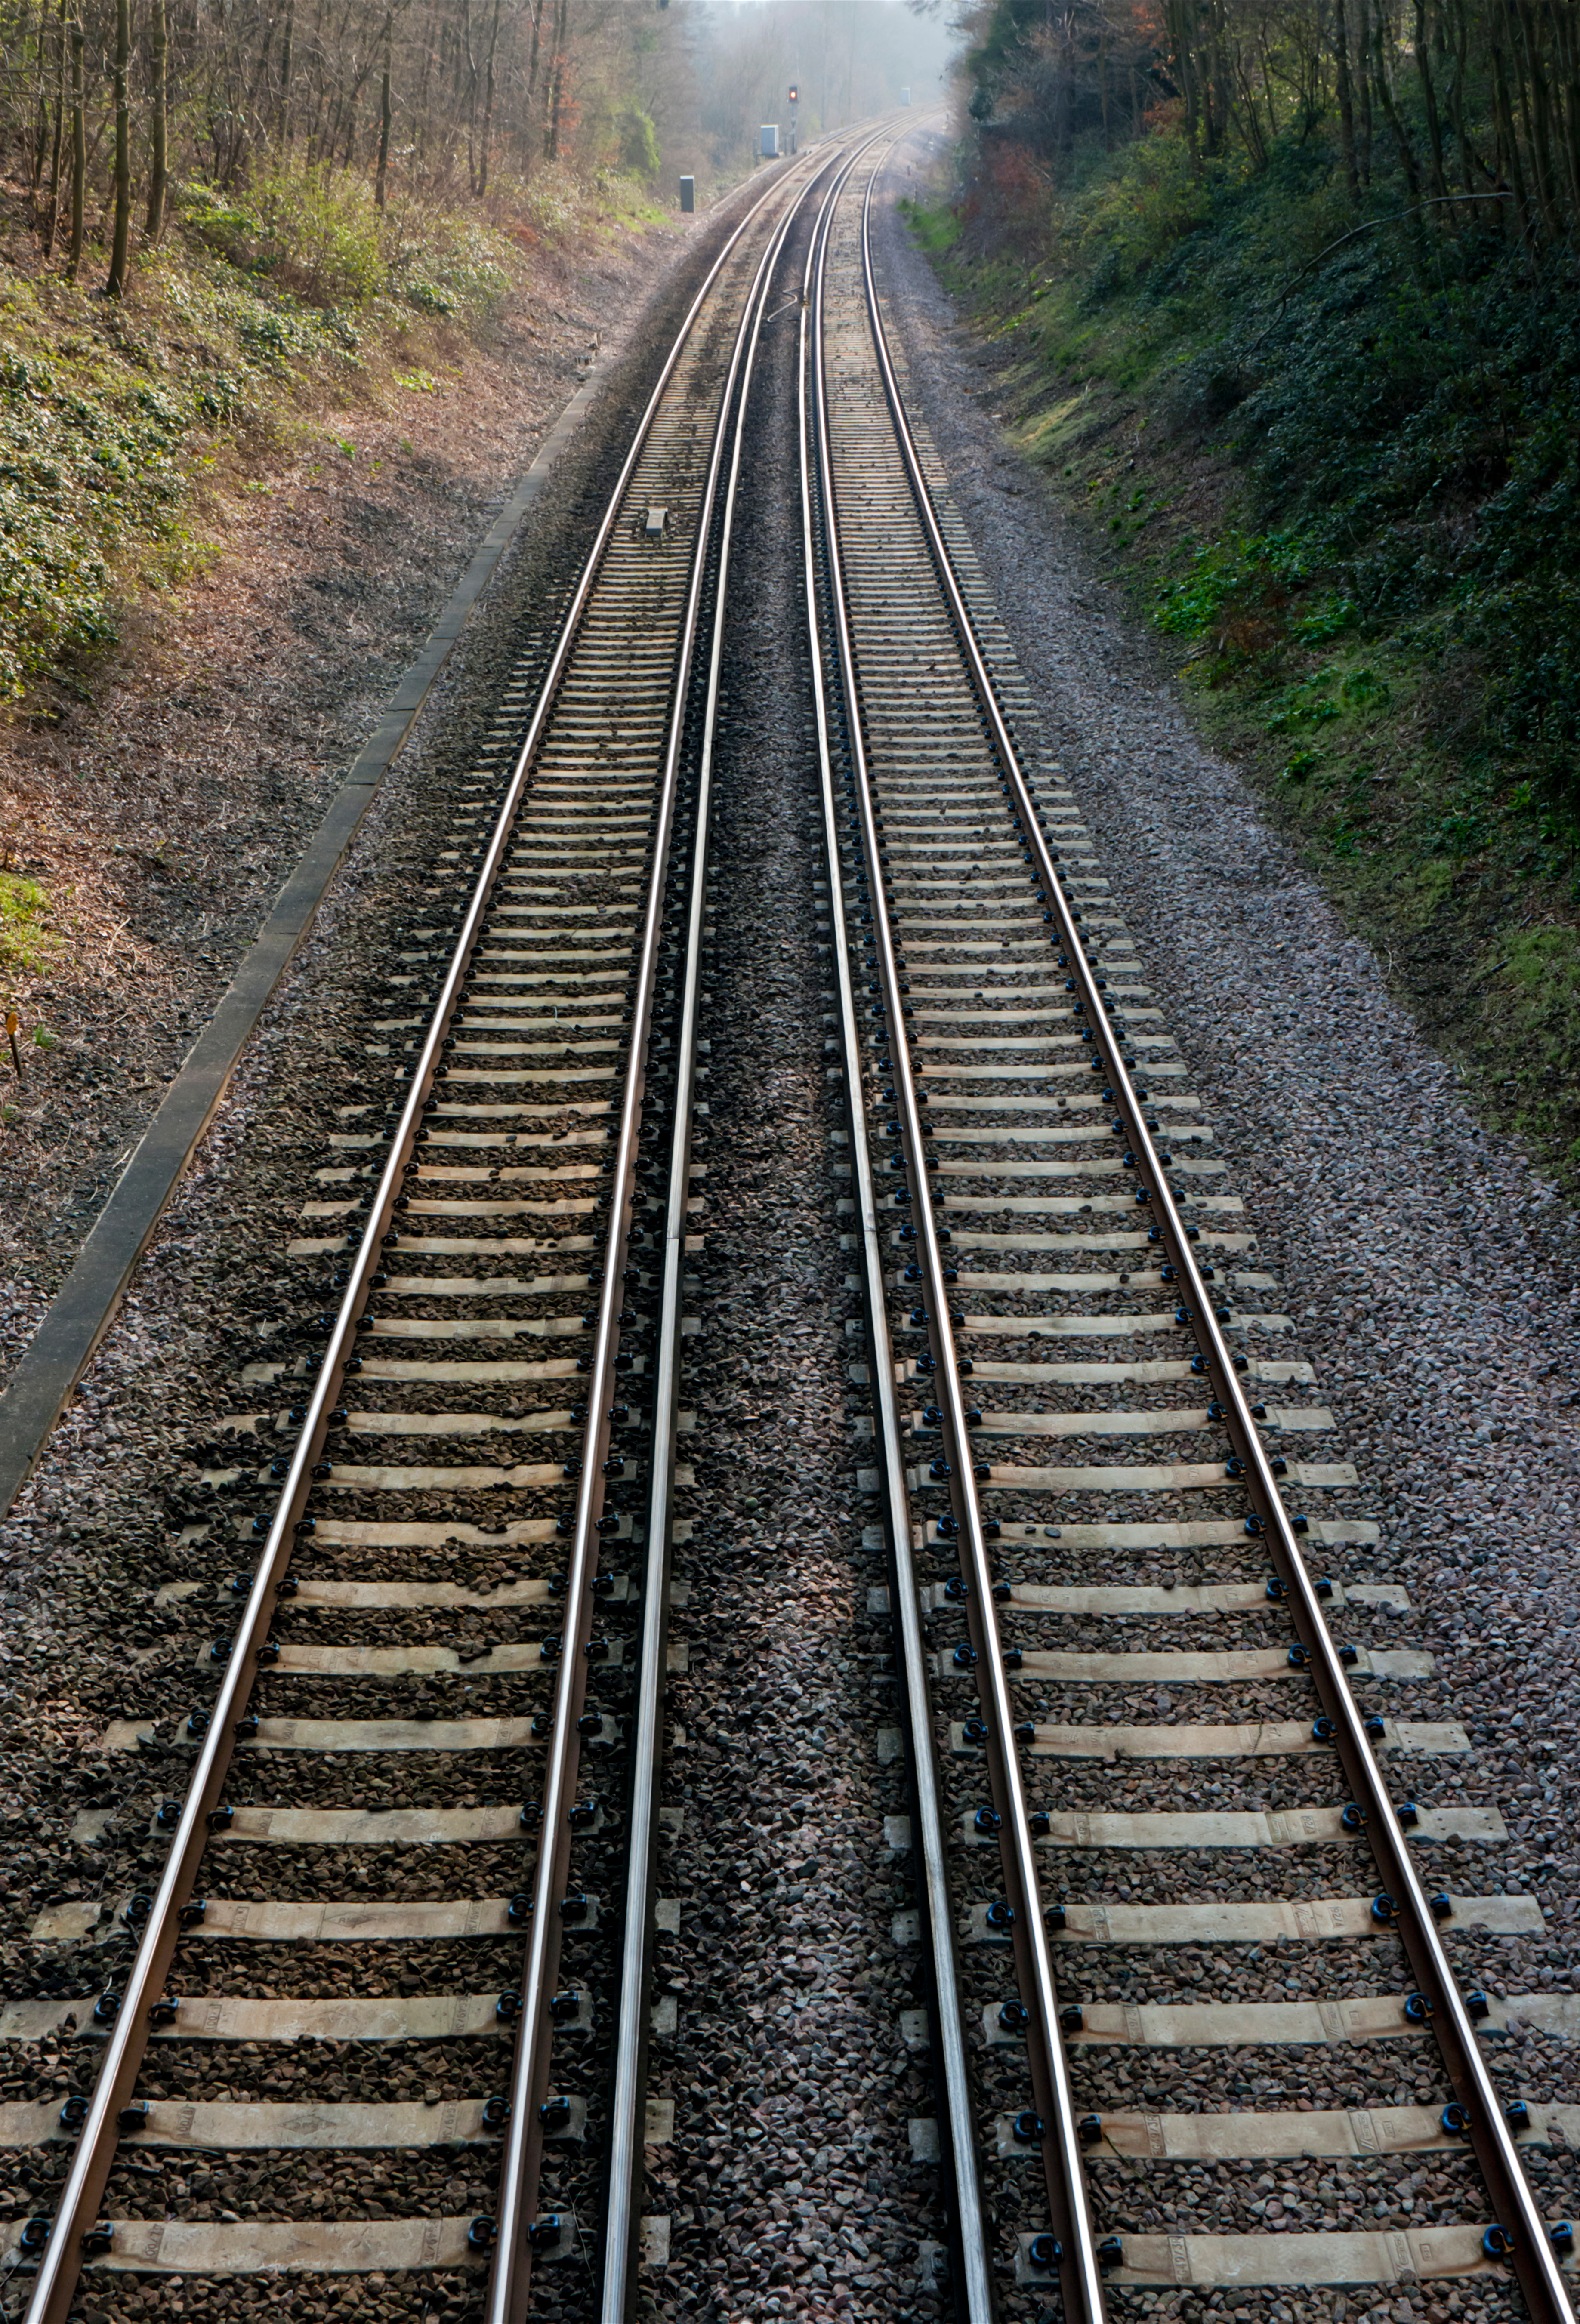 Parallel railway tracks recede into the distance in Surrey, England